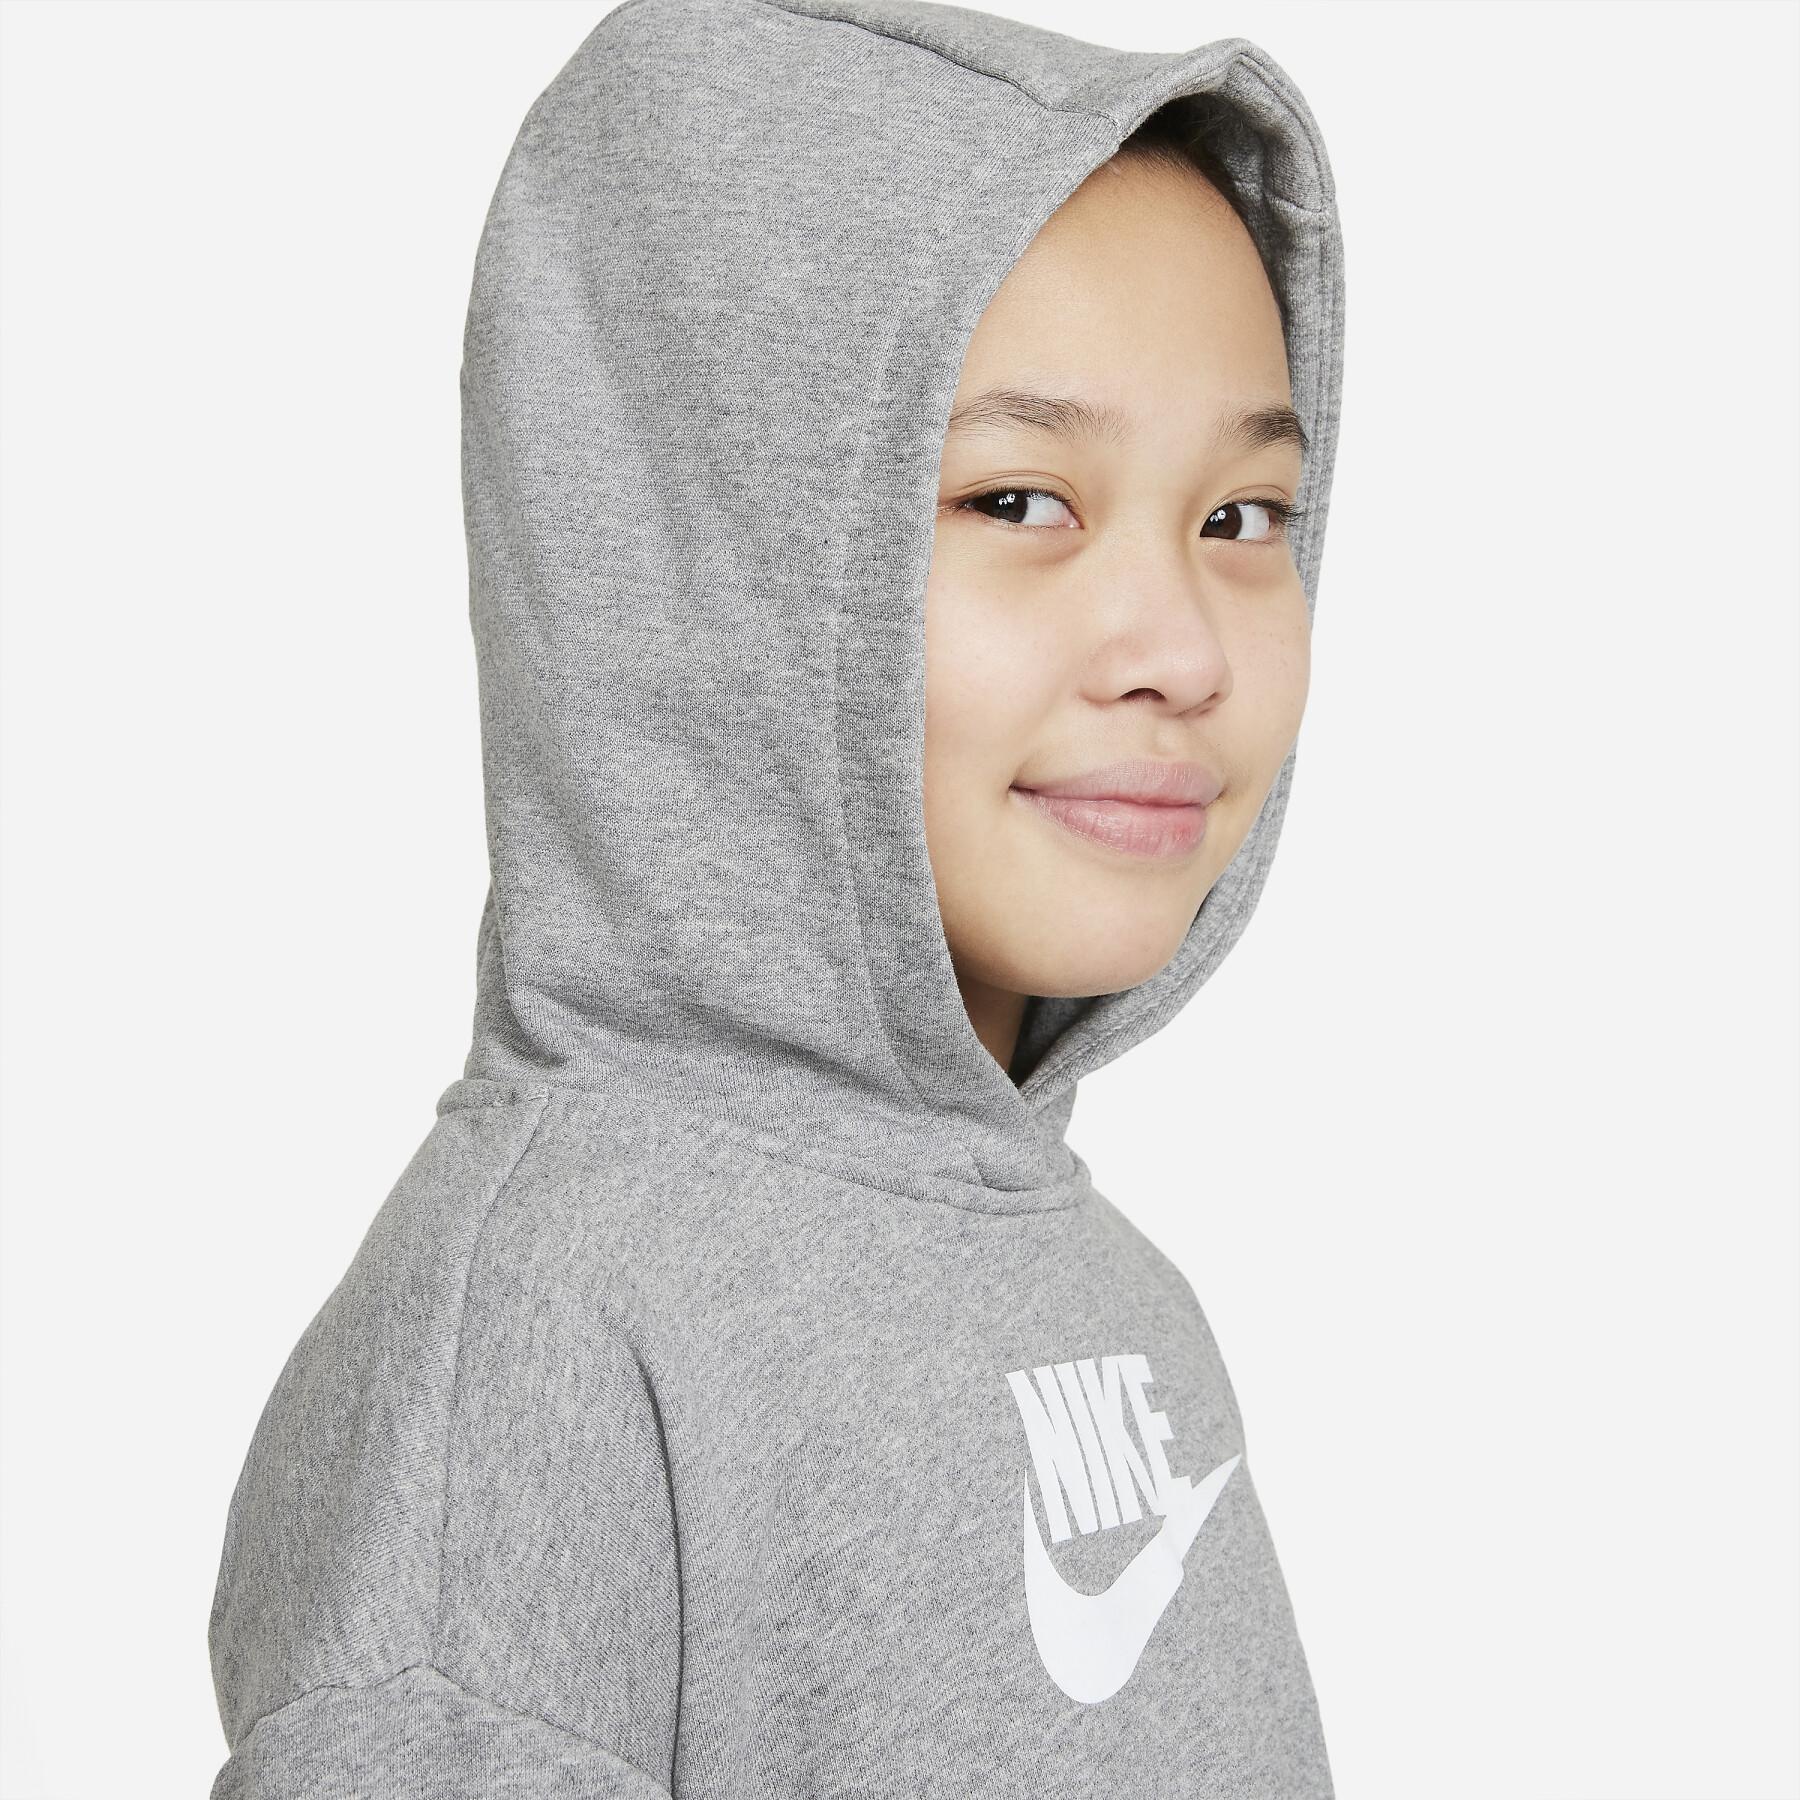 Sweatshirt à capuche fille Nike Club